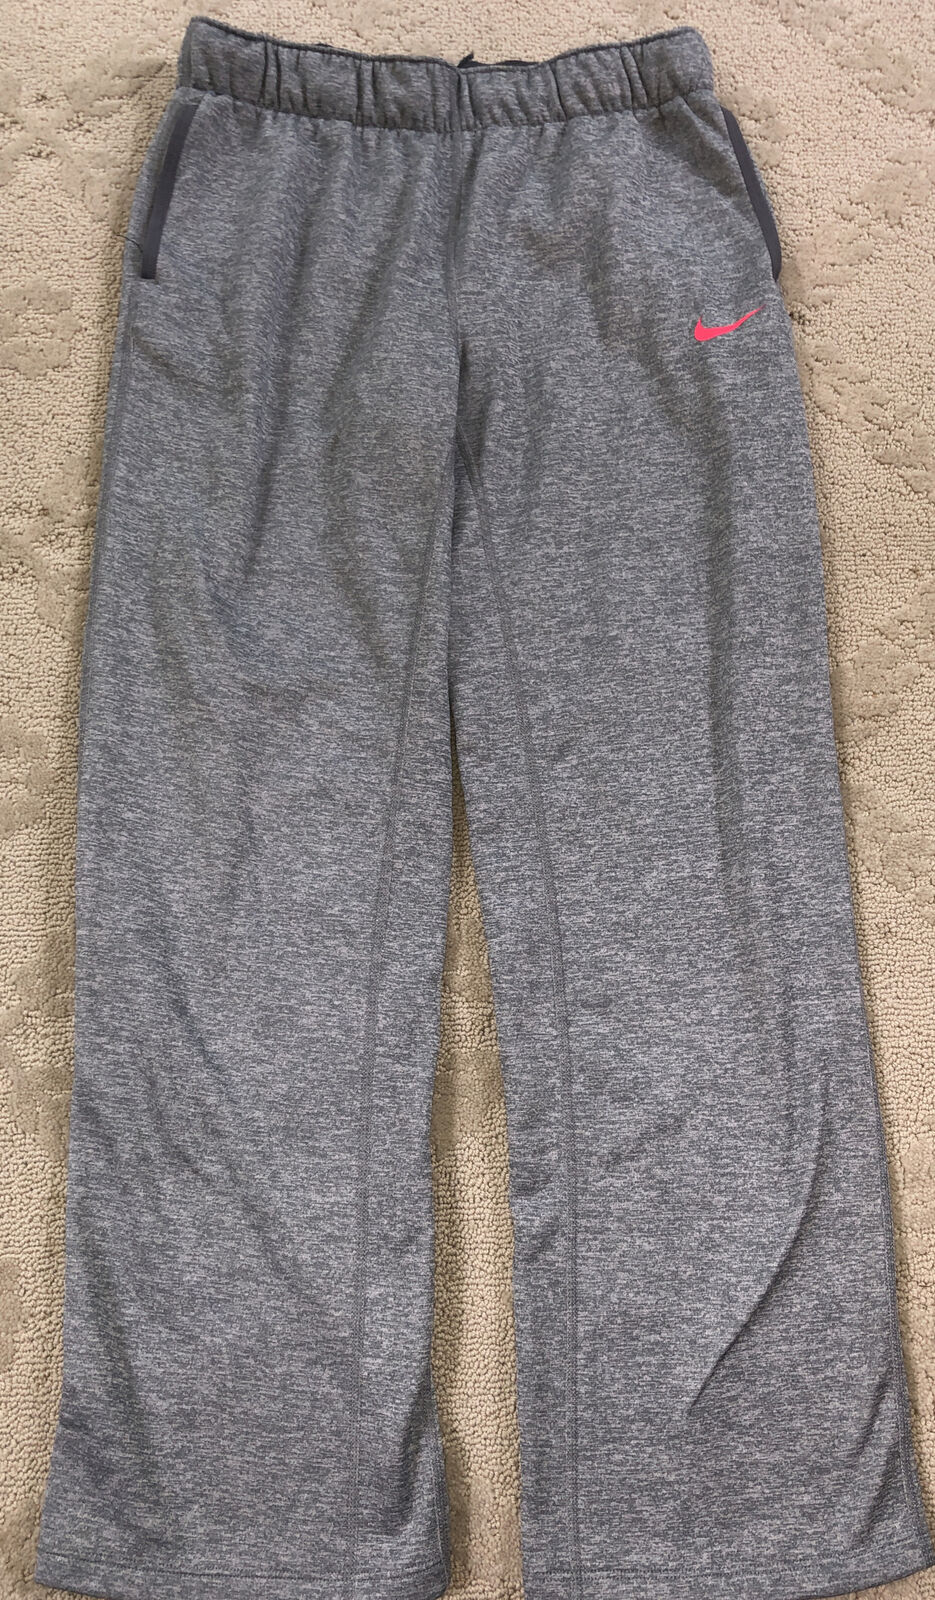 Nike Dri Fit Yxl Boys Or Girls Xl Track Pants Gray Authentic Sweatpants Jogger